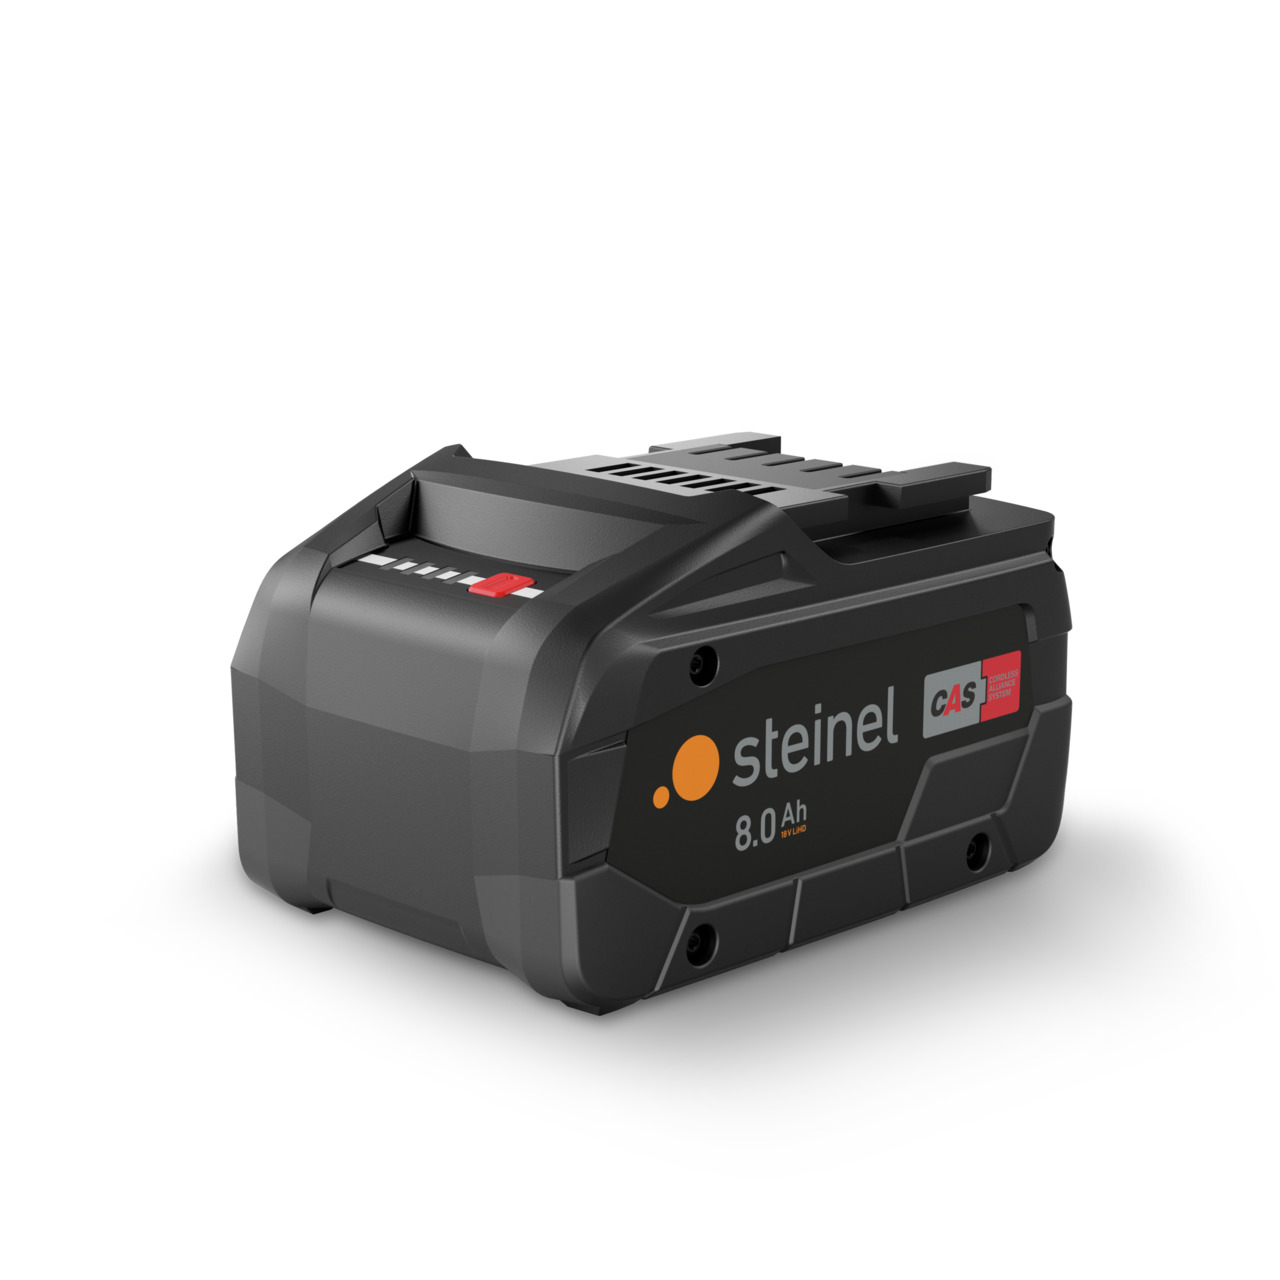 Steinel - Mobile Heat 5 Roofing Kit, Cordless Professional Heat Gun